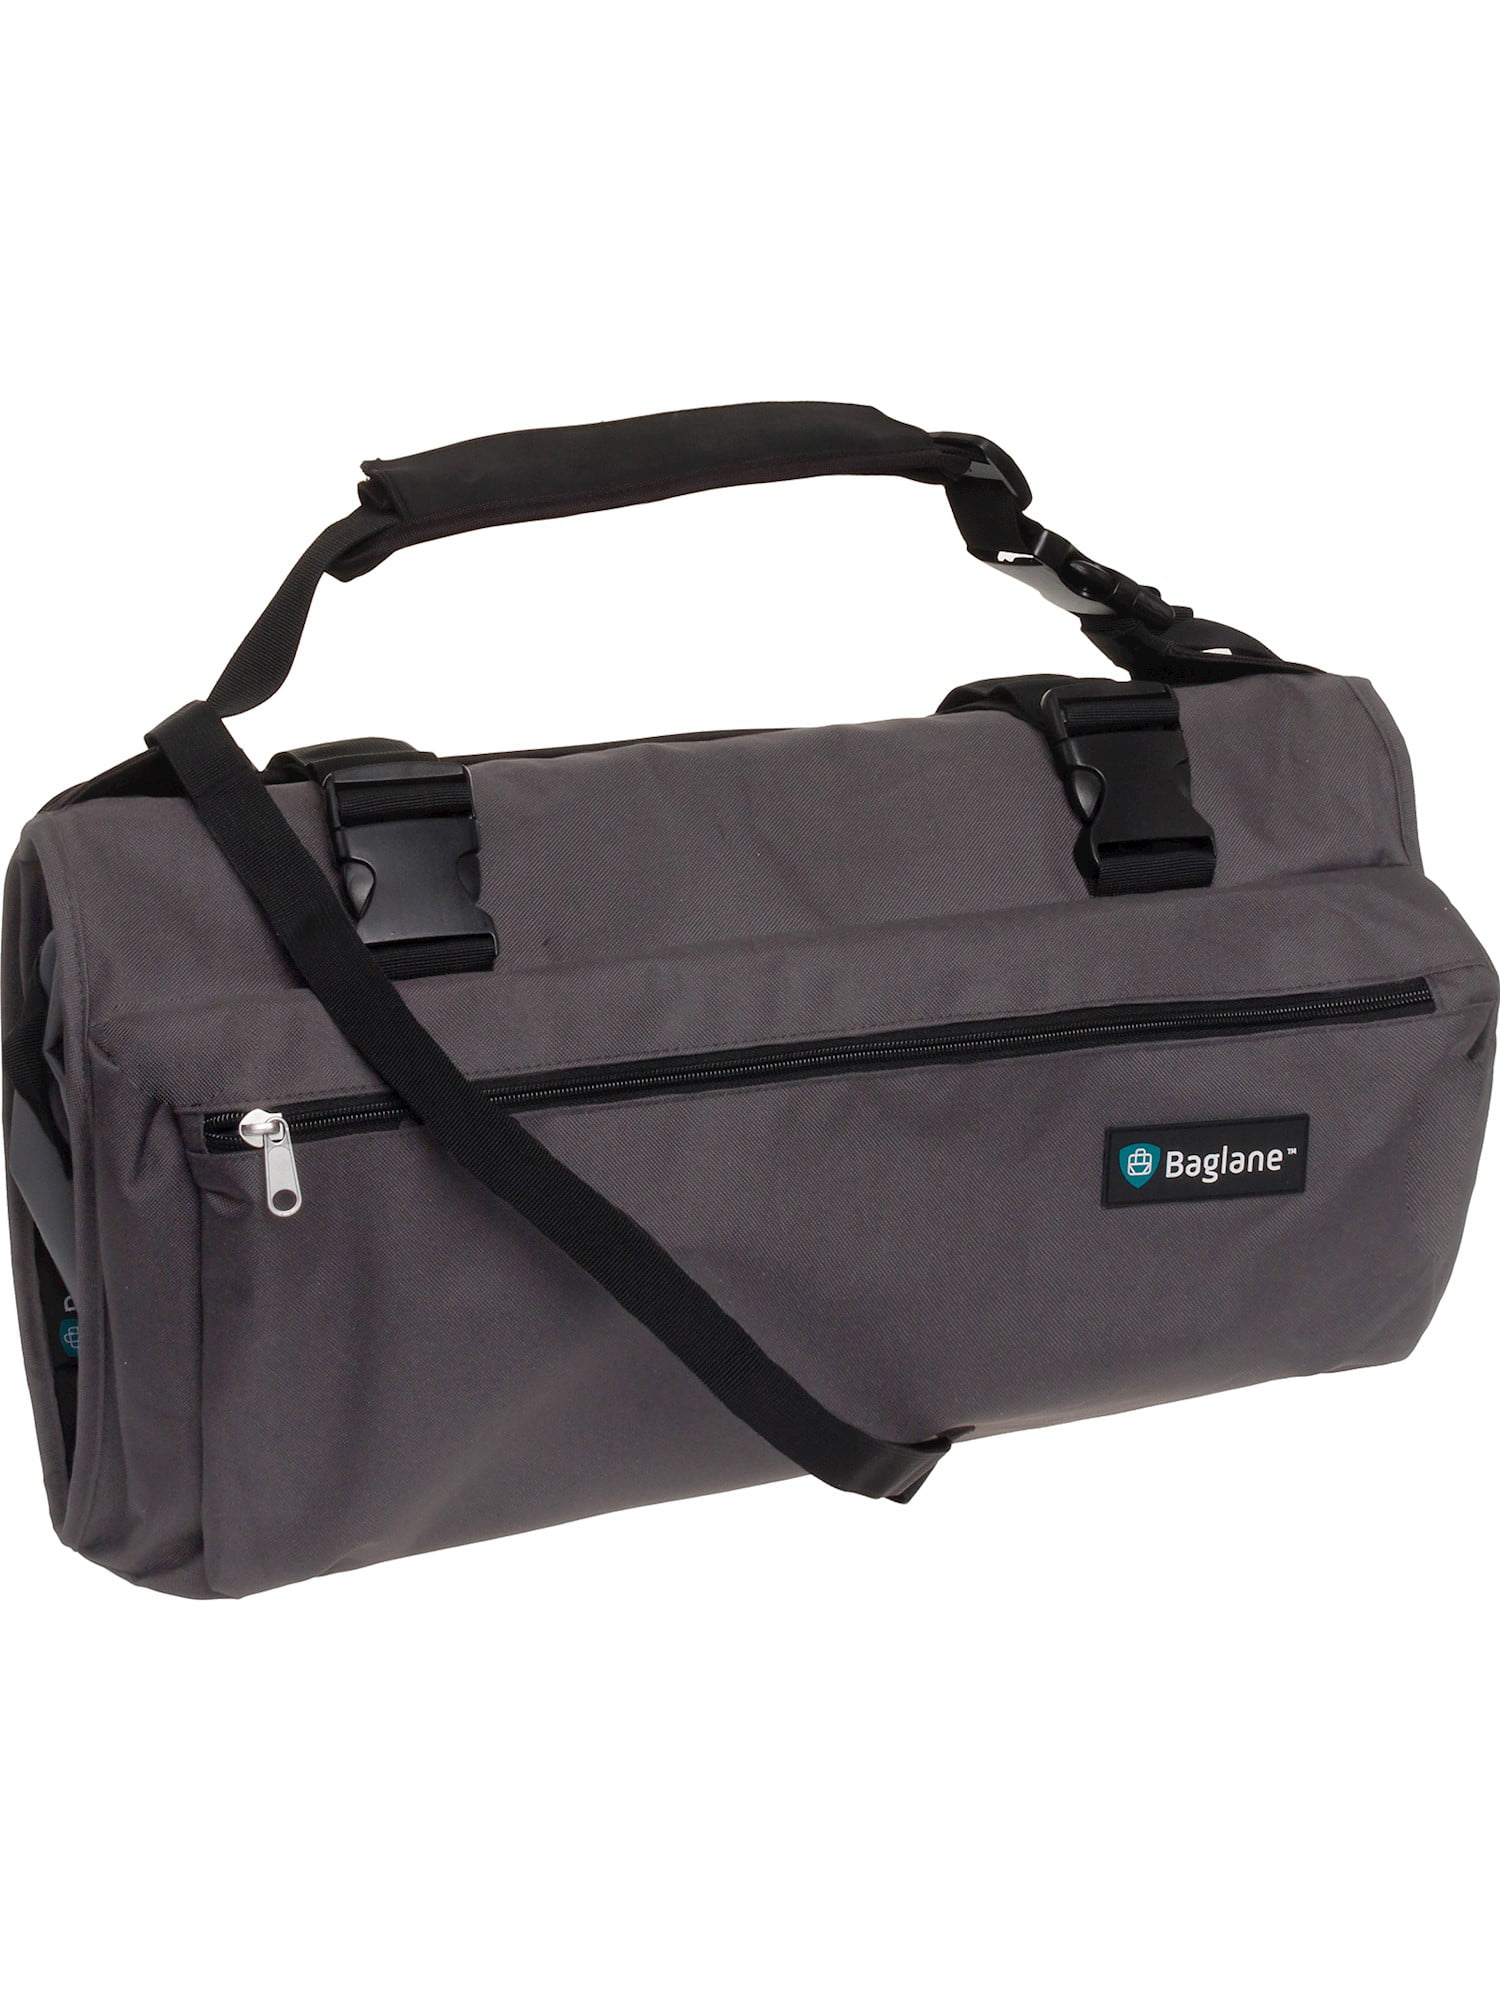 BagLane Garment Suit Bag - Travel Carry On Garment Bag - 0 - 0